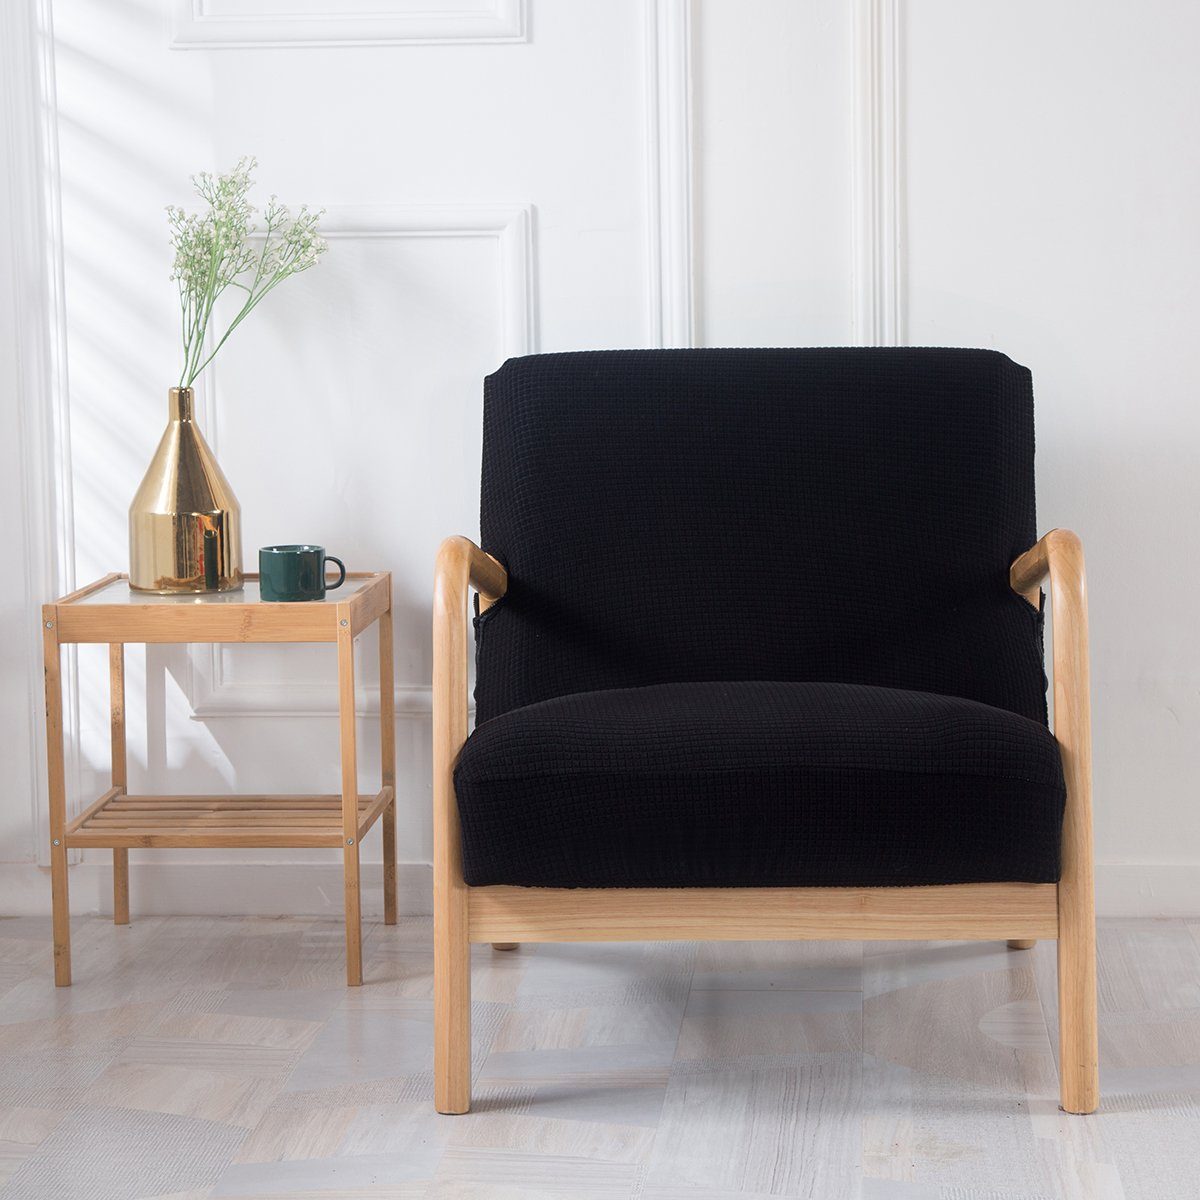 Wohnkultur Sesselbezug Reißverschluss Stuhlhusse Stuhlbezug, Qelus, Schwarz Stretch